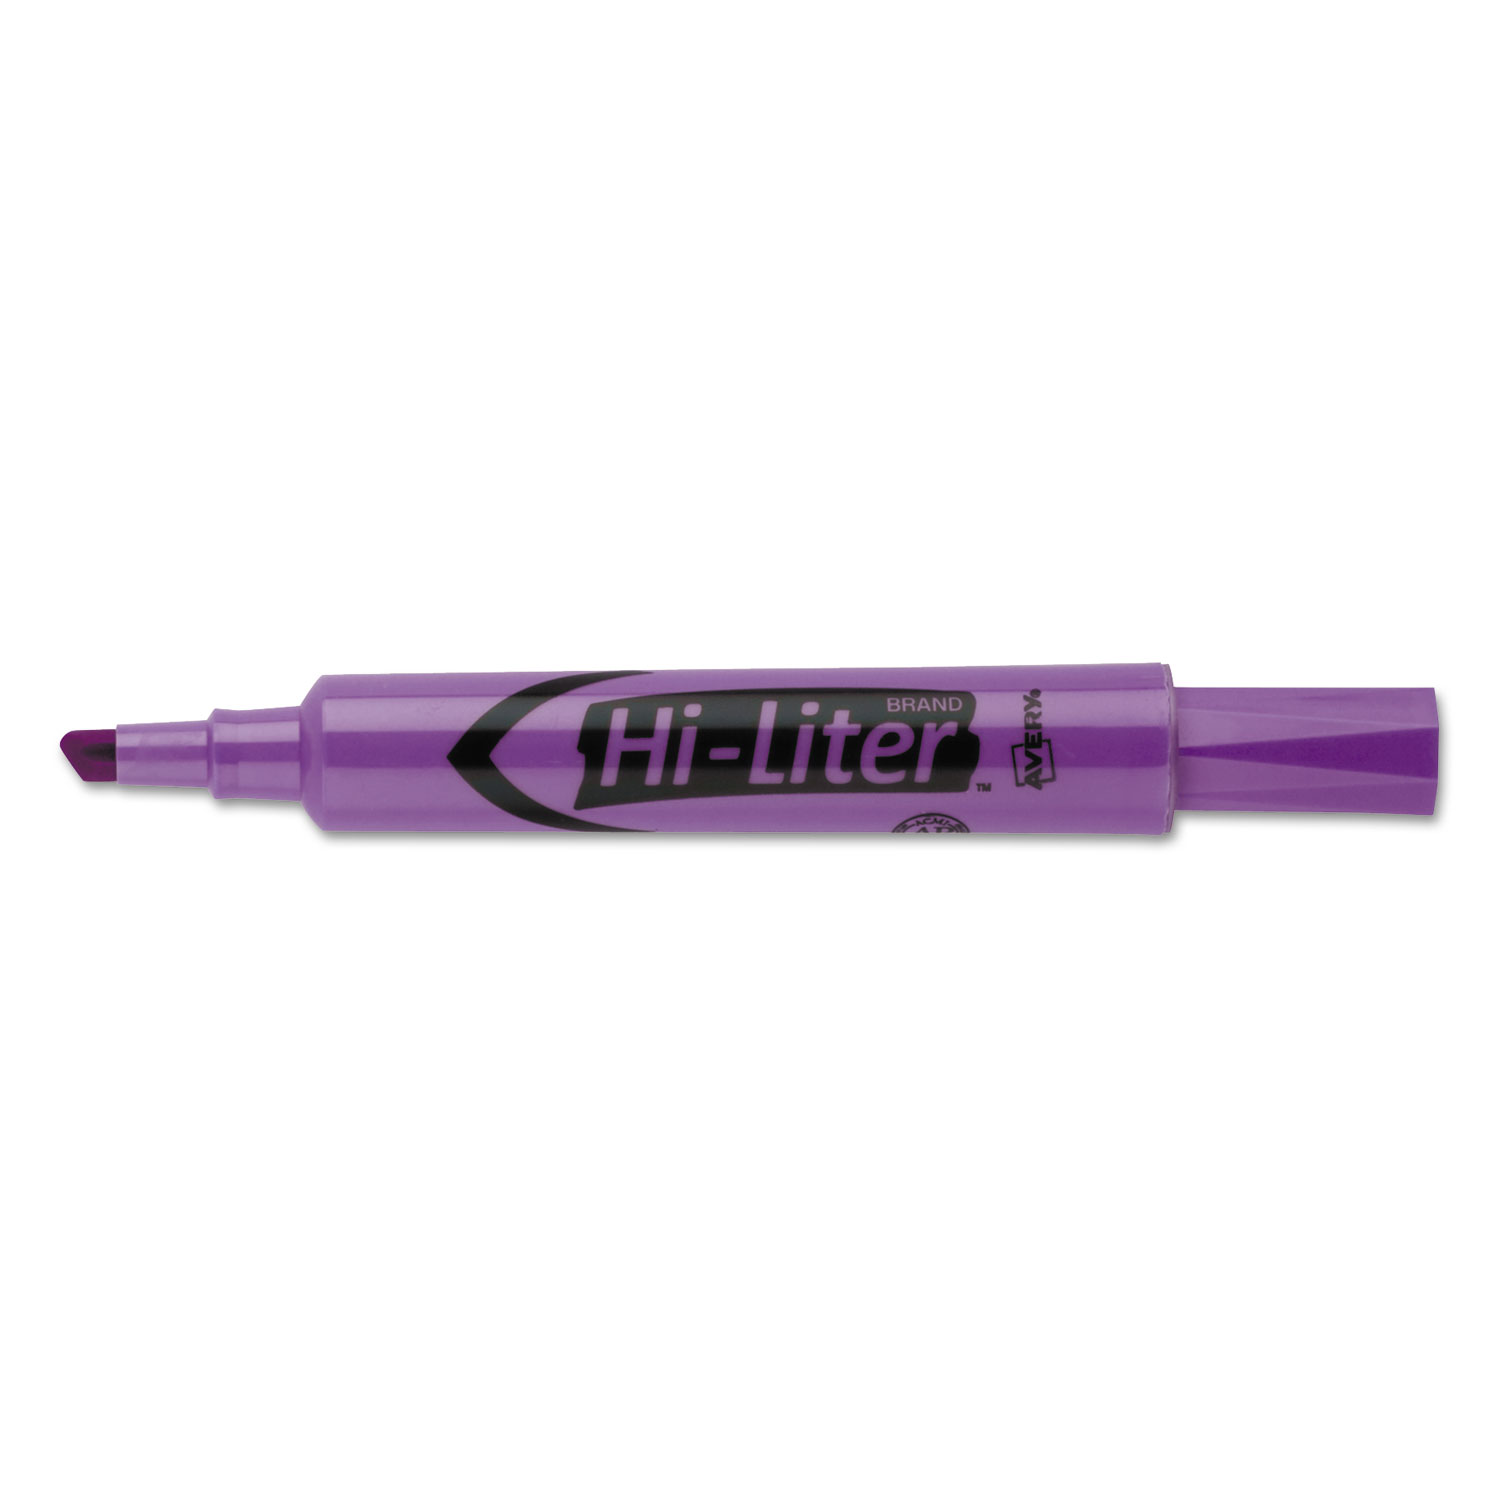 HI-LITER Desk-Style Highlighter, Chisel Tip, Fluorescent Purple Ink, Dozen